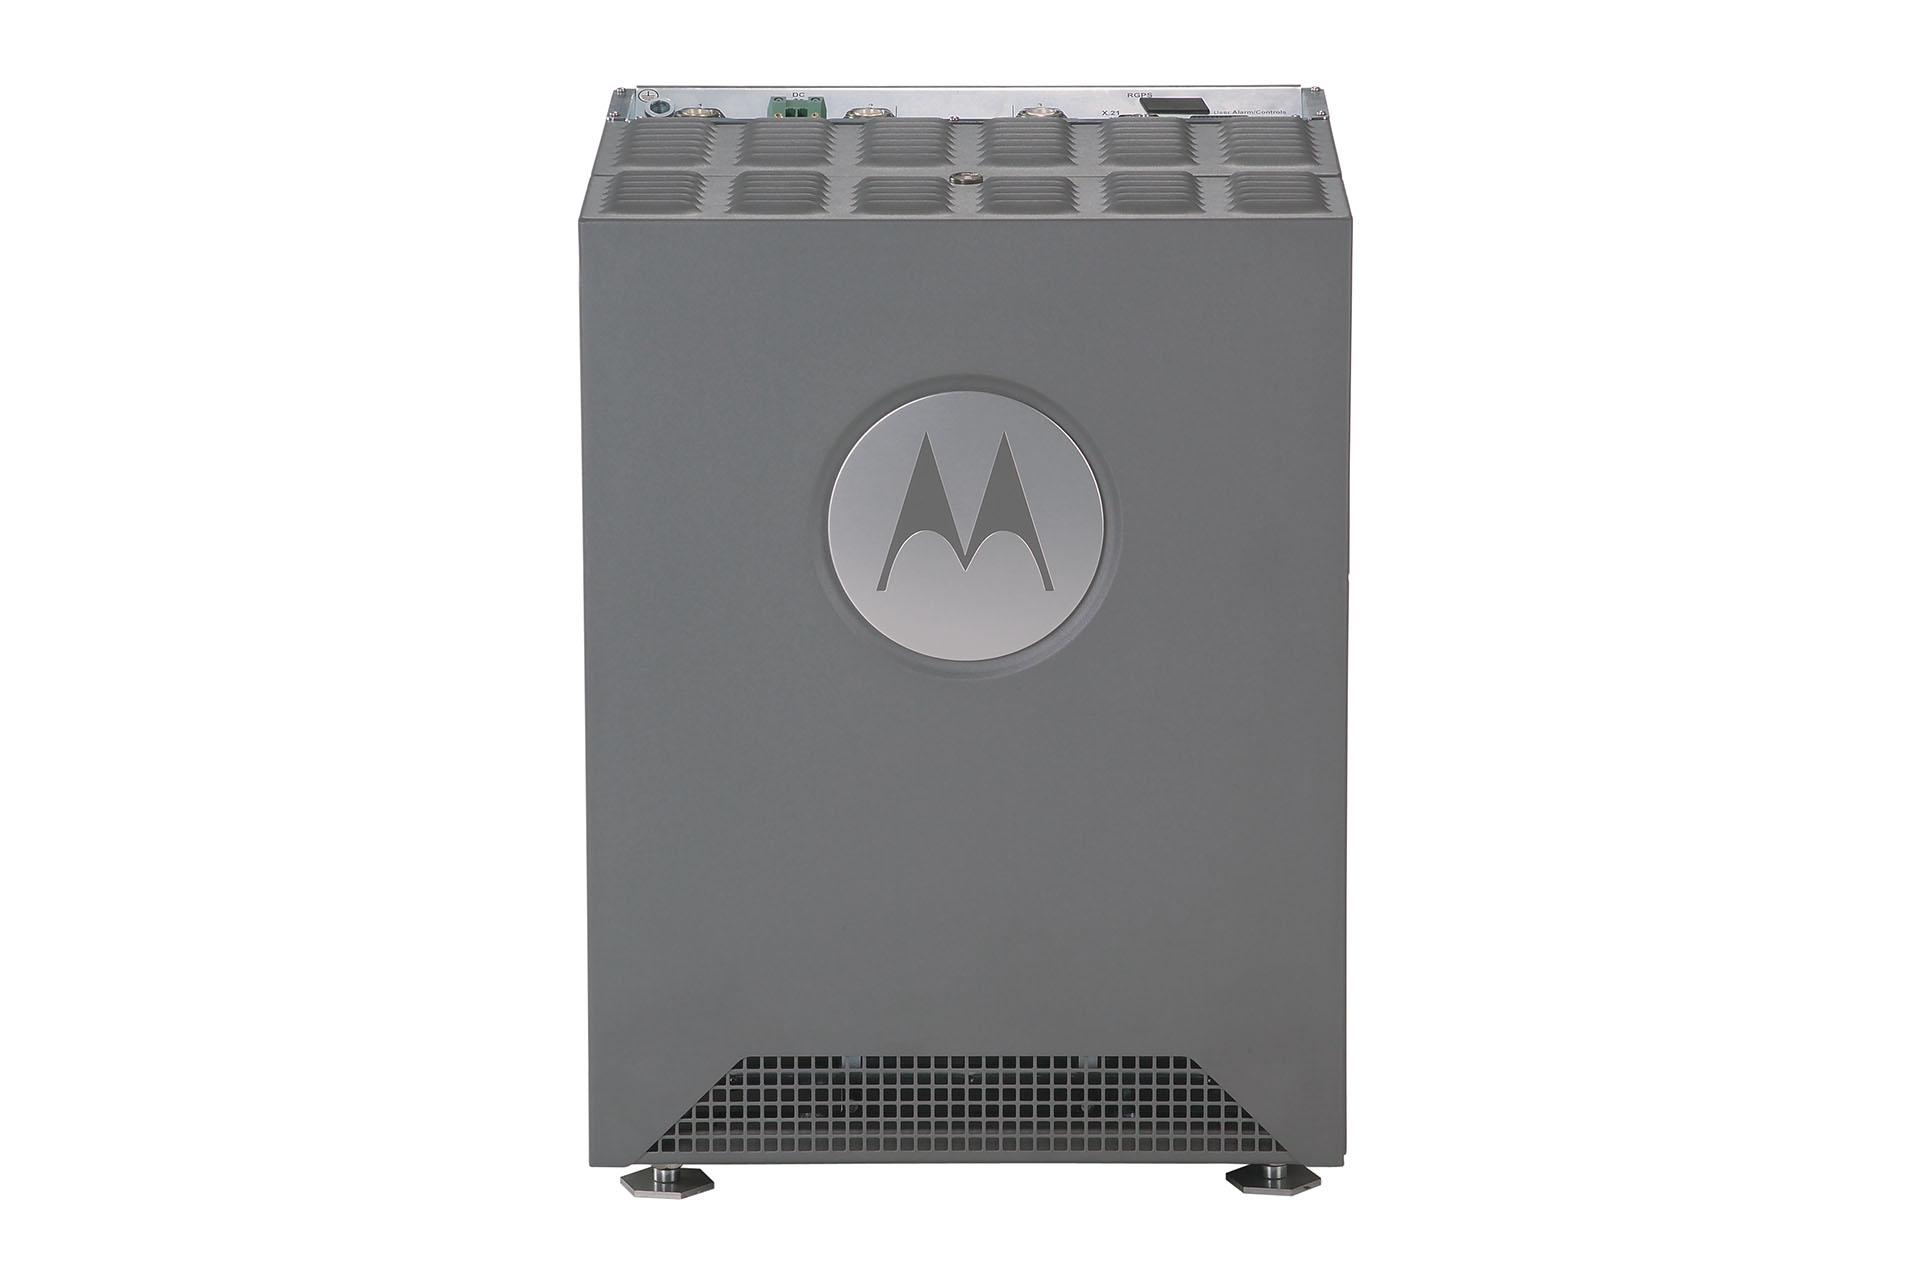 Motorola MTS2